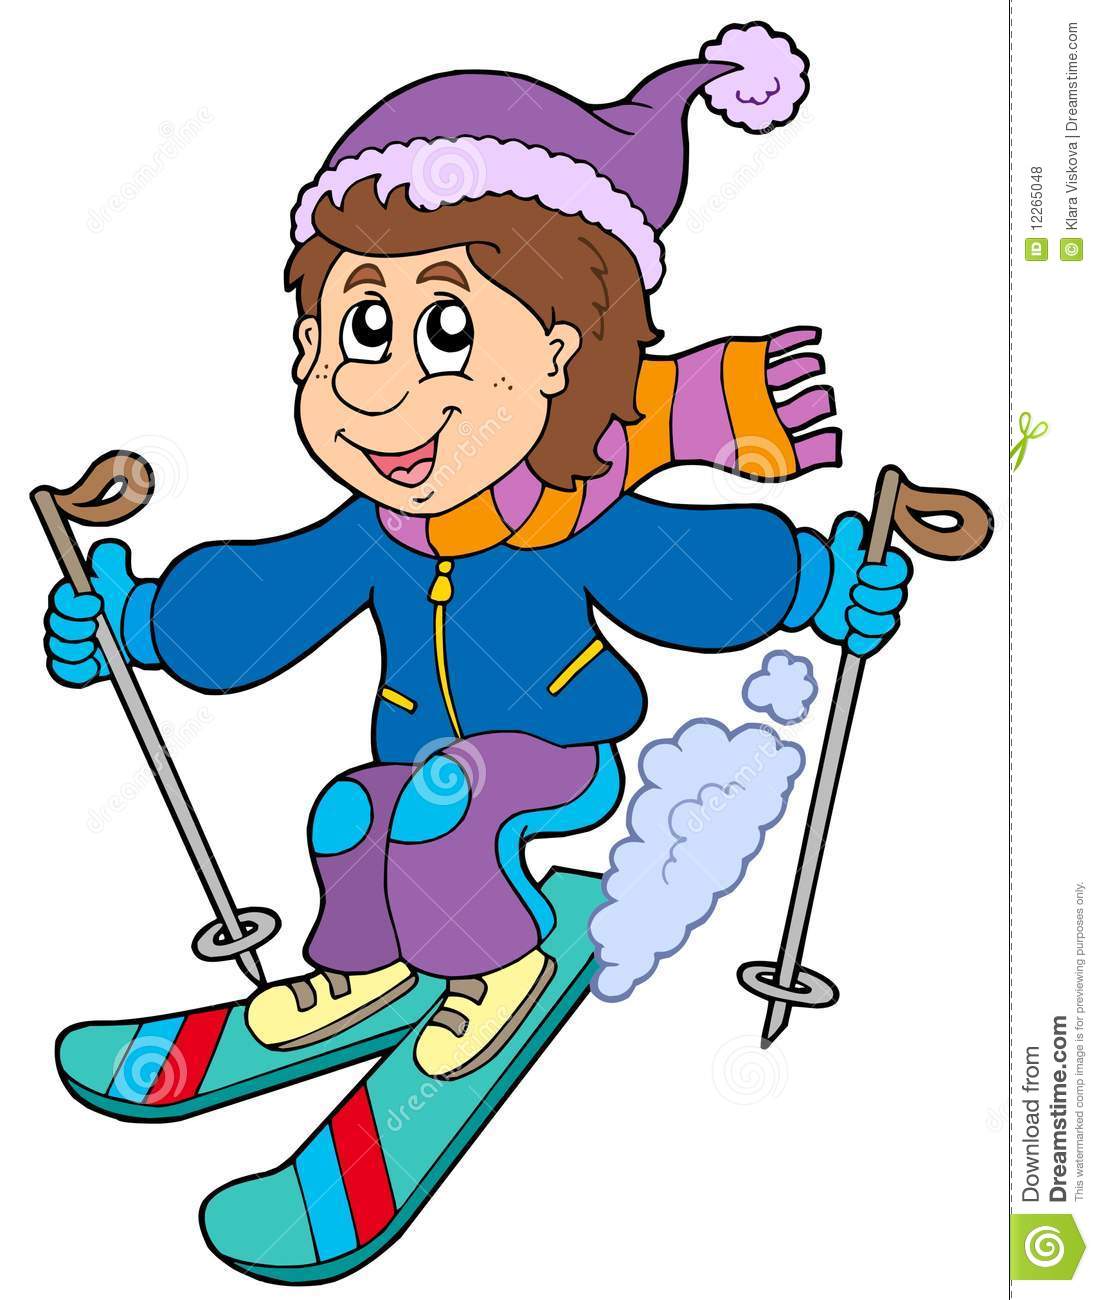 Cartoon Skiing Boy Royalty Free Stock Photos   Image  12265048